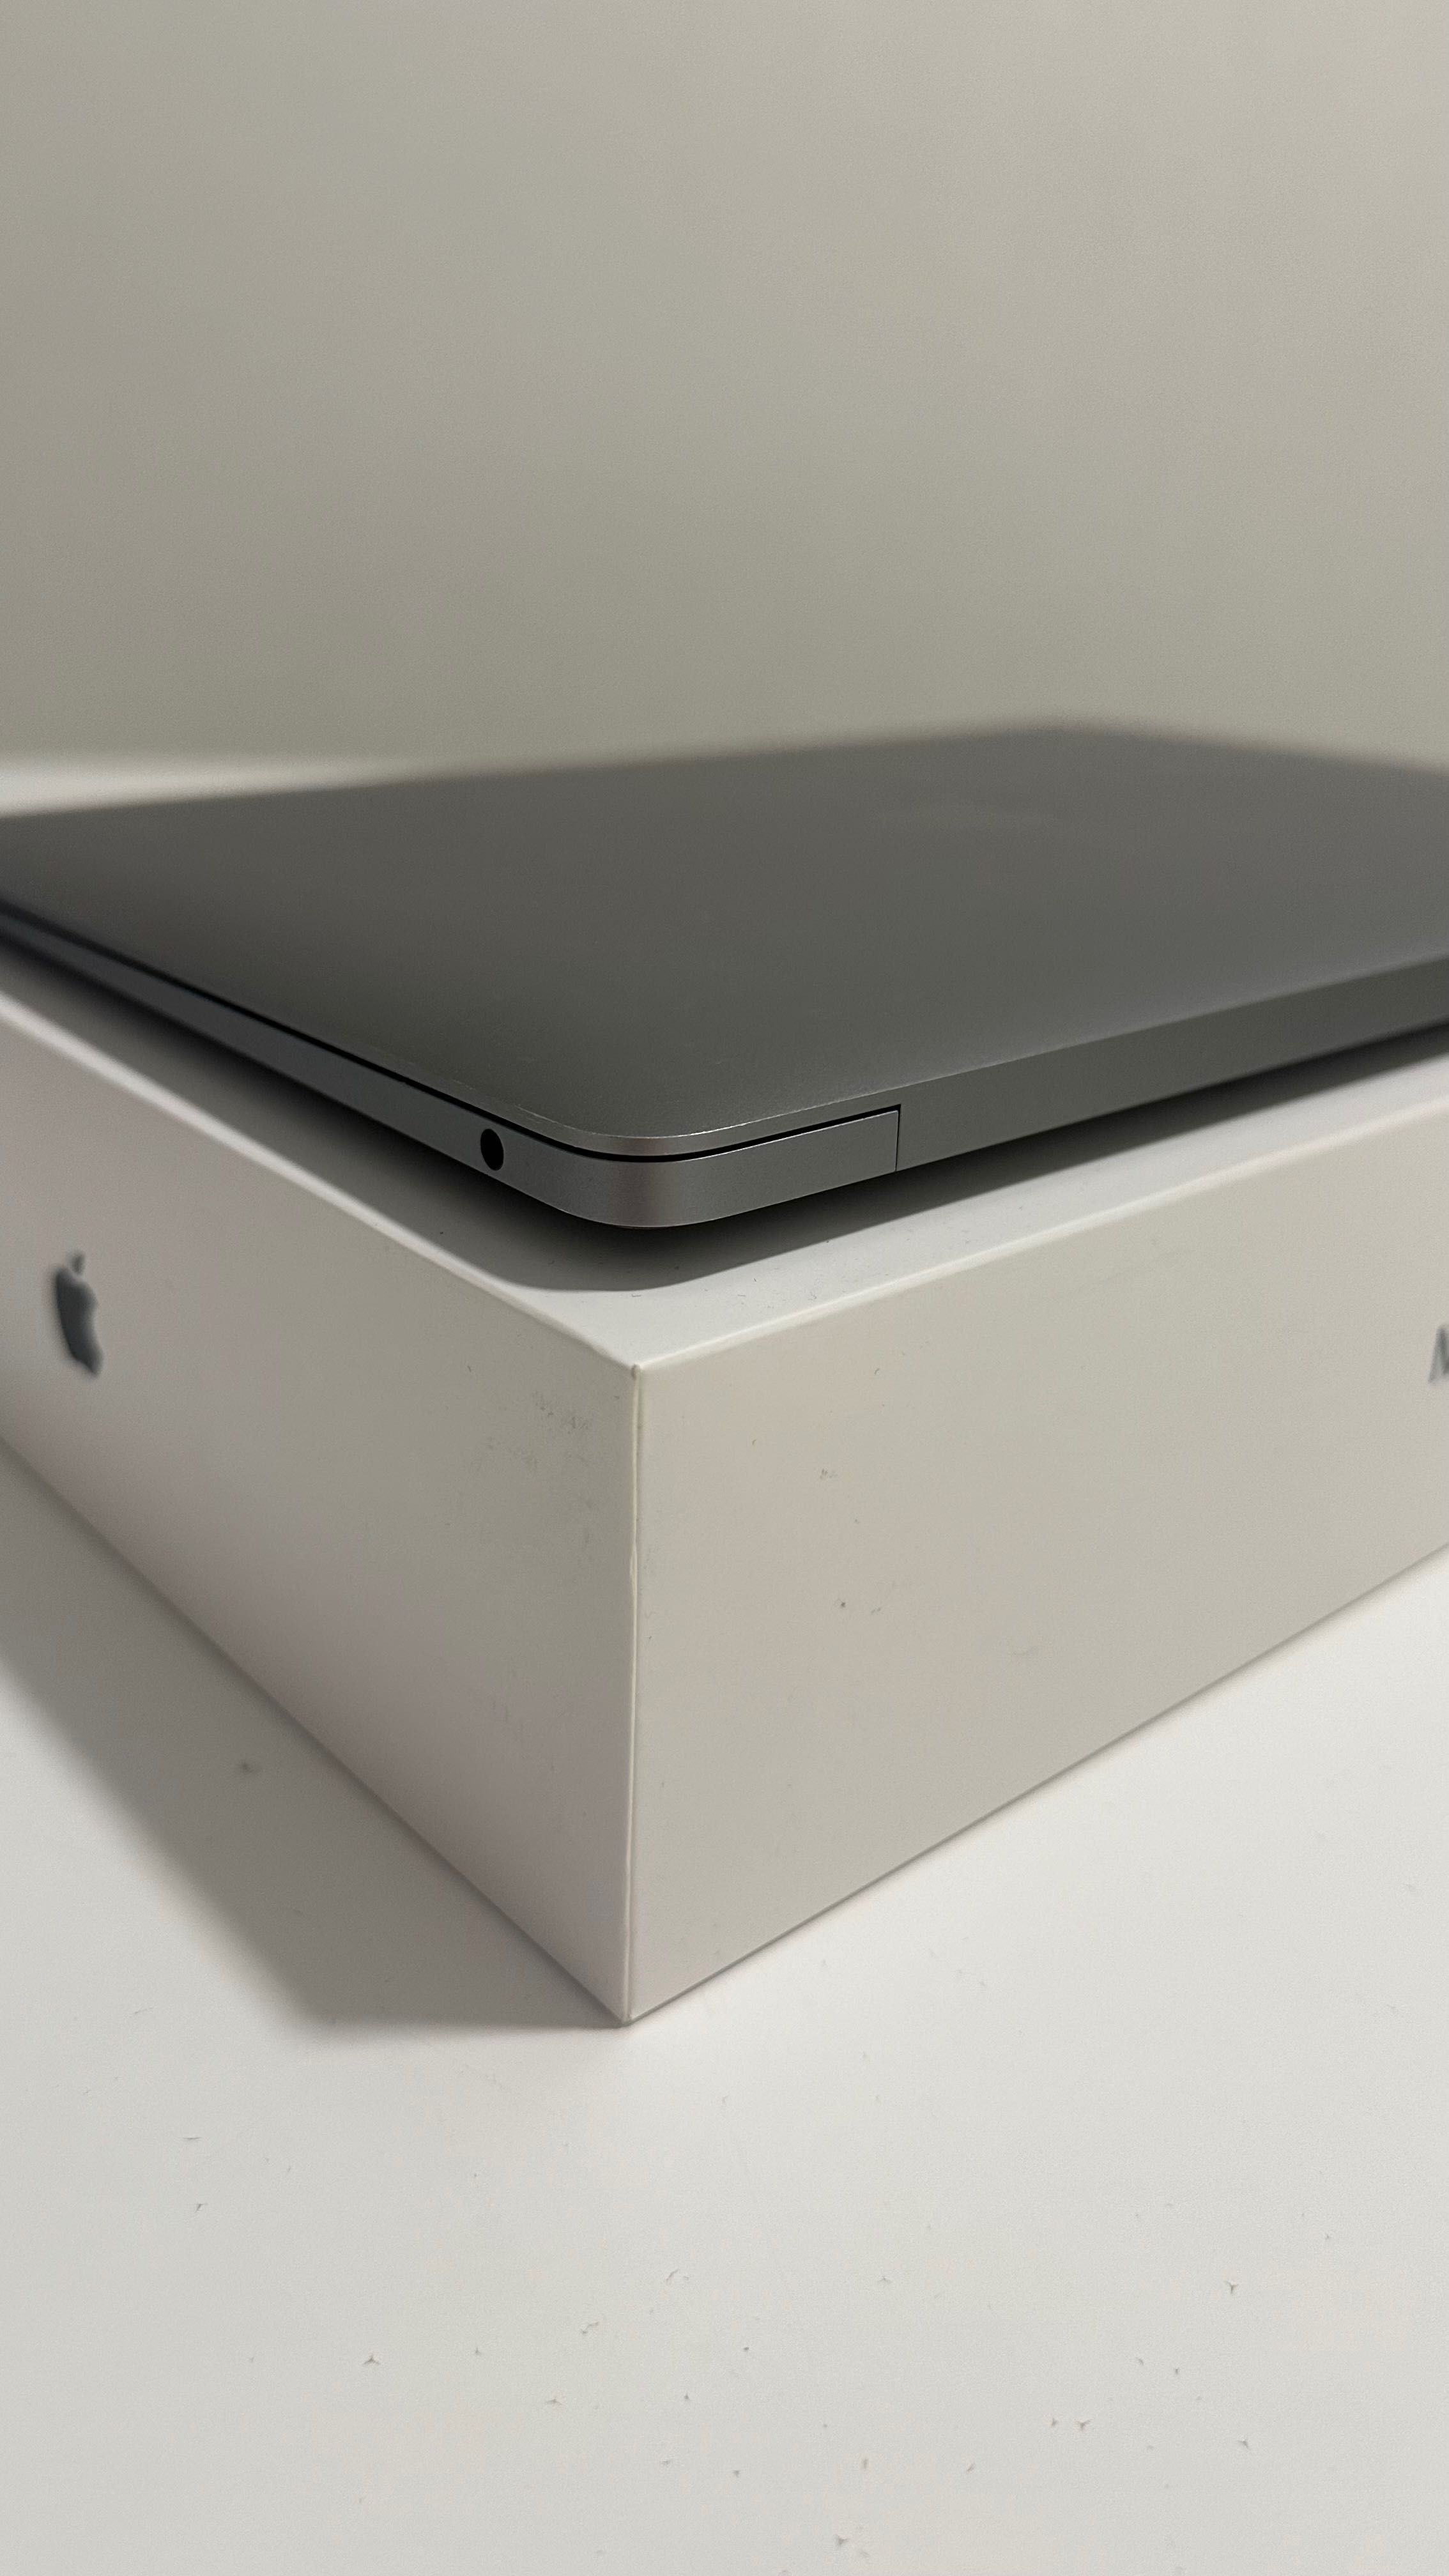 Macbook Air M1, 8 GB, 256 SSD, 2021 Space Gray